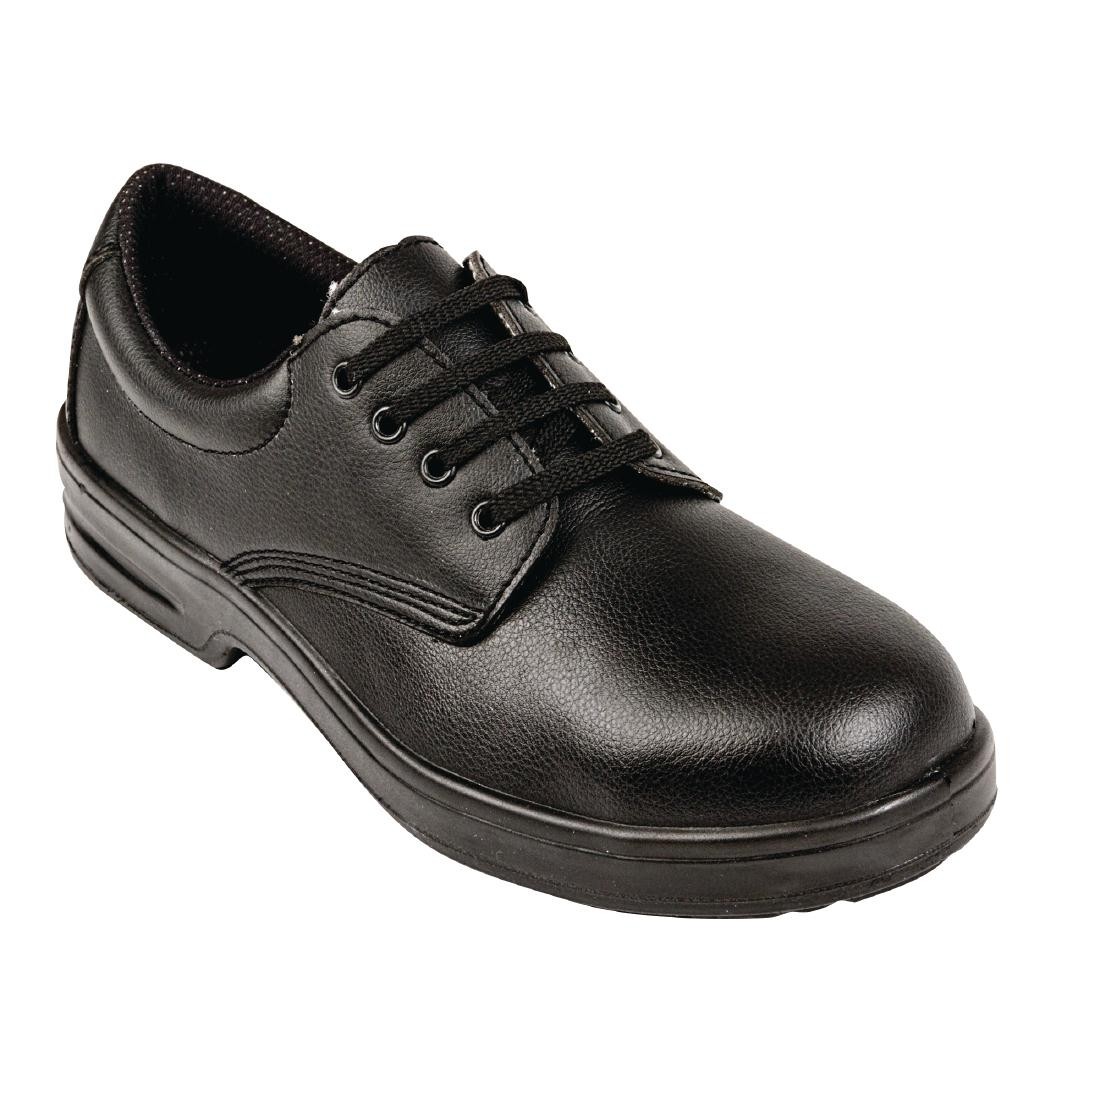 Lites Safety Lace Up Shoe Black